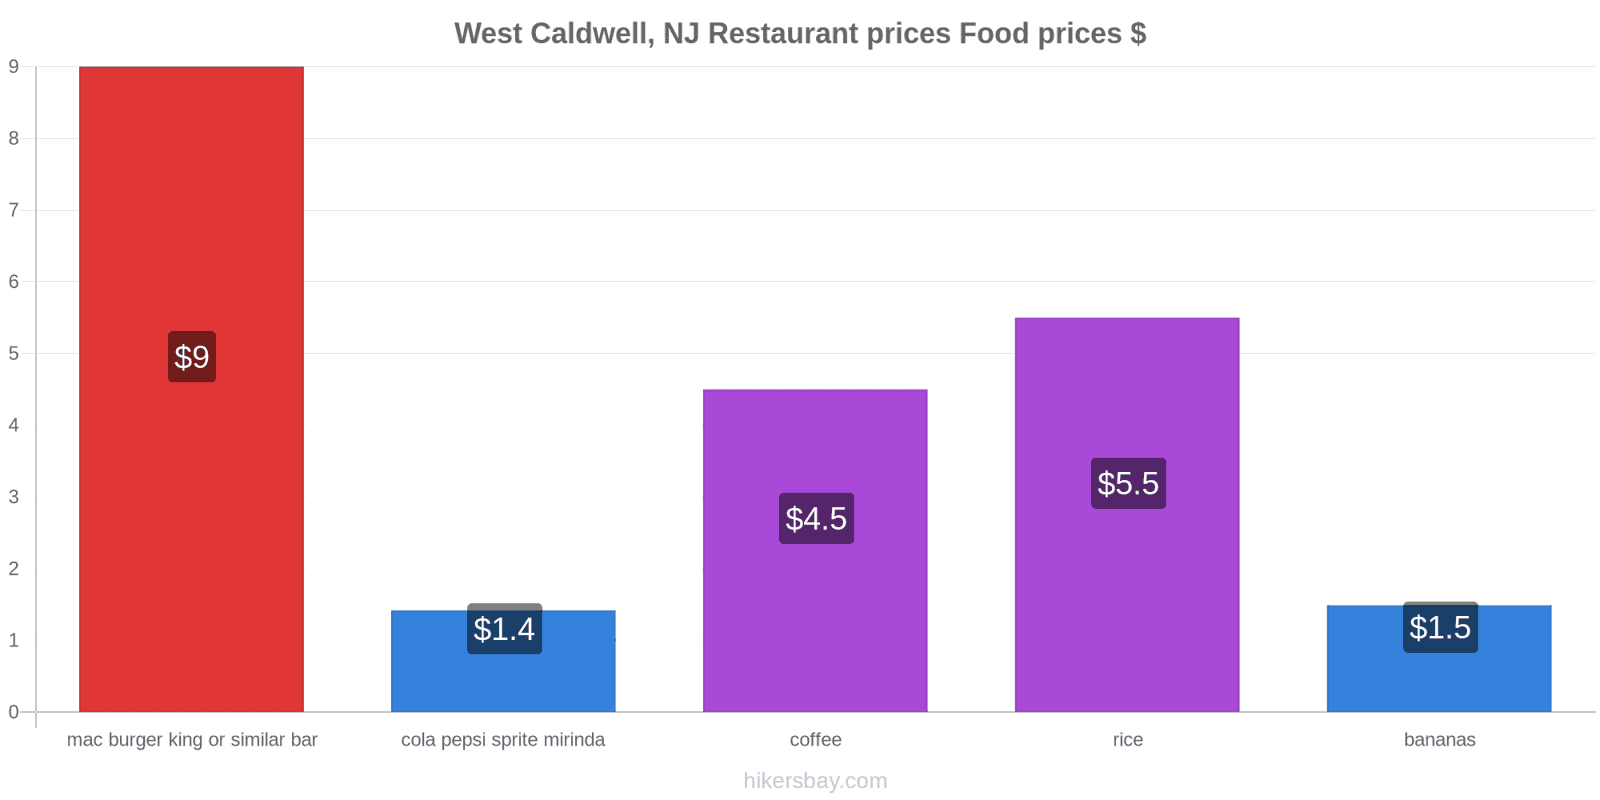 West Caldwell, NJ price changes hikersbay.com